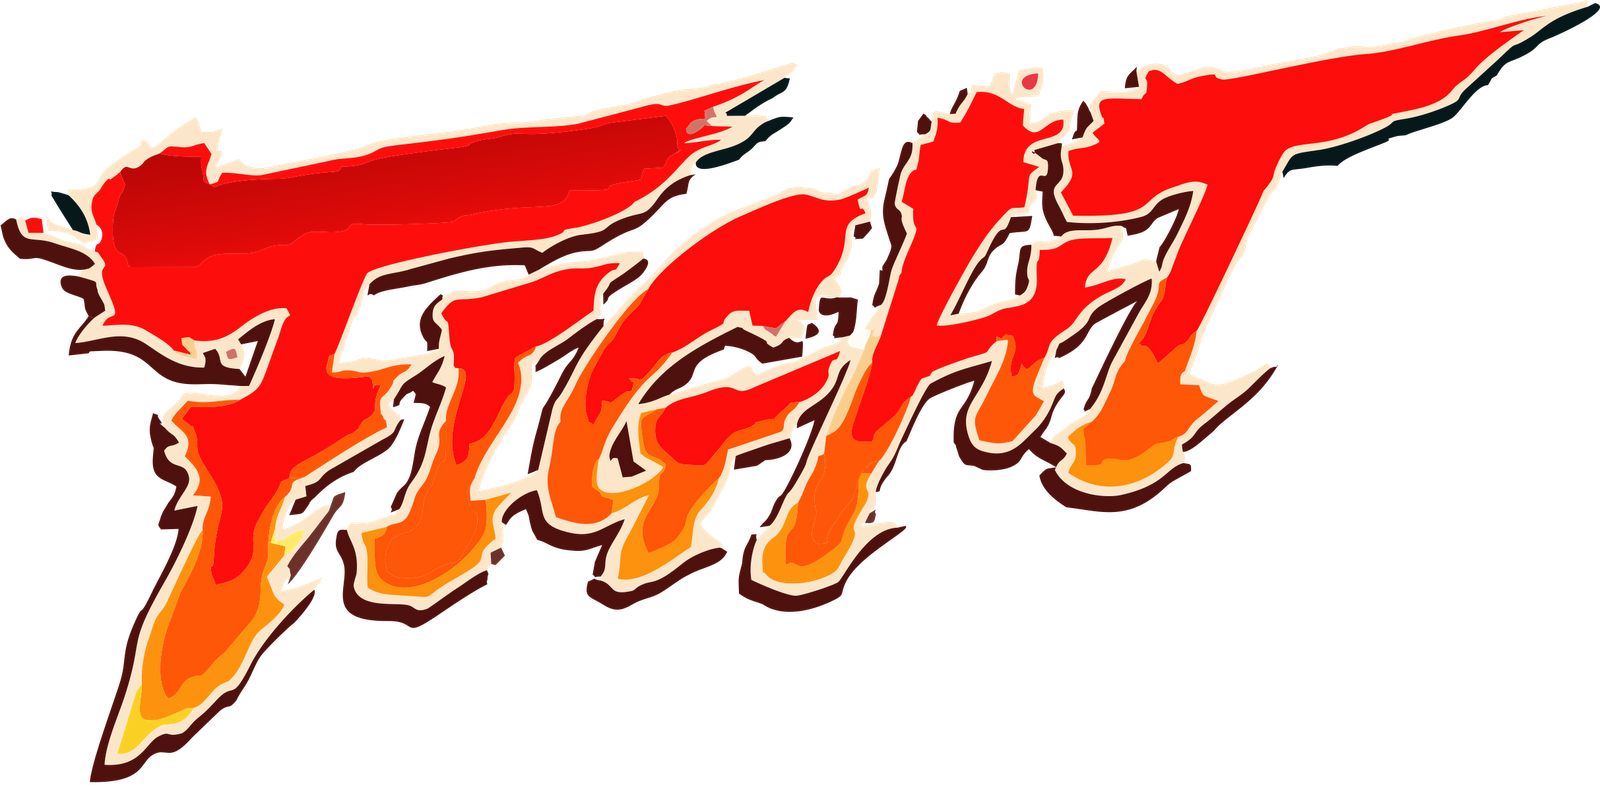 FIGHT! - Corea Cultura